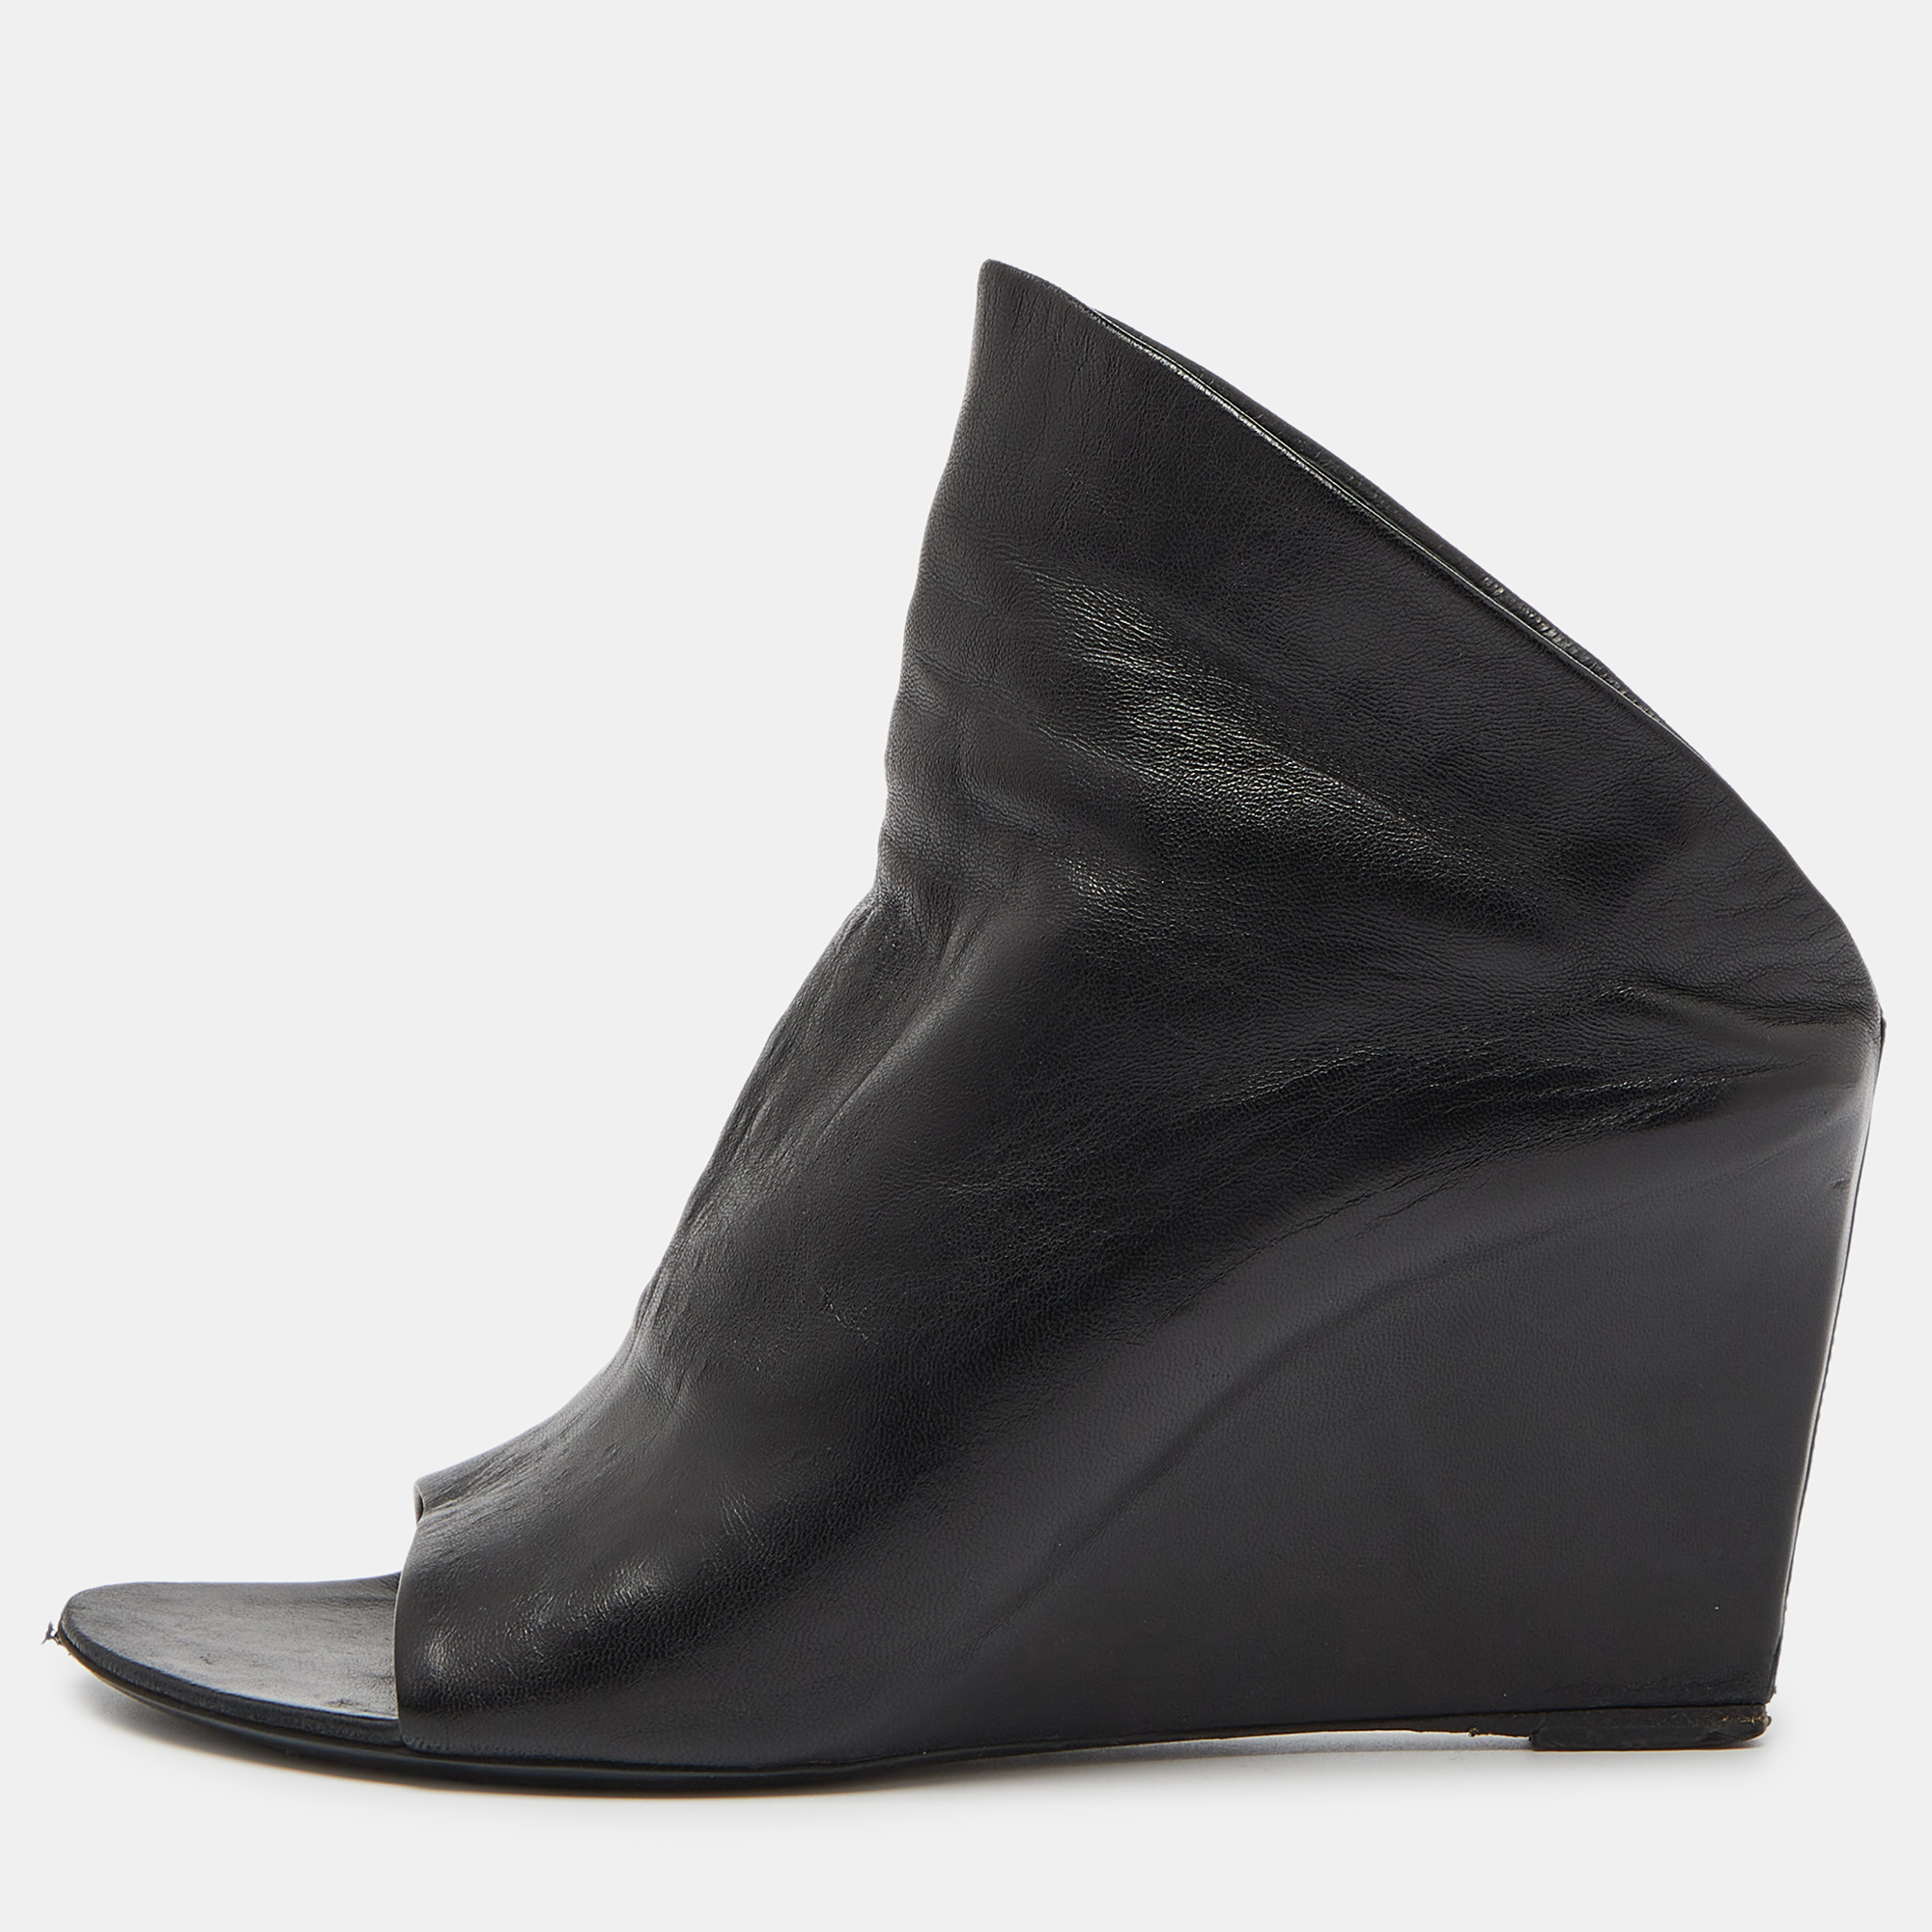 Balenciaga black leather glove wedge sandals size 38.5